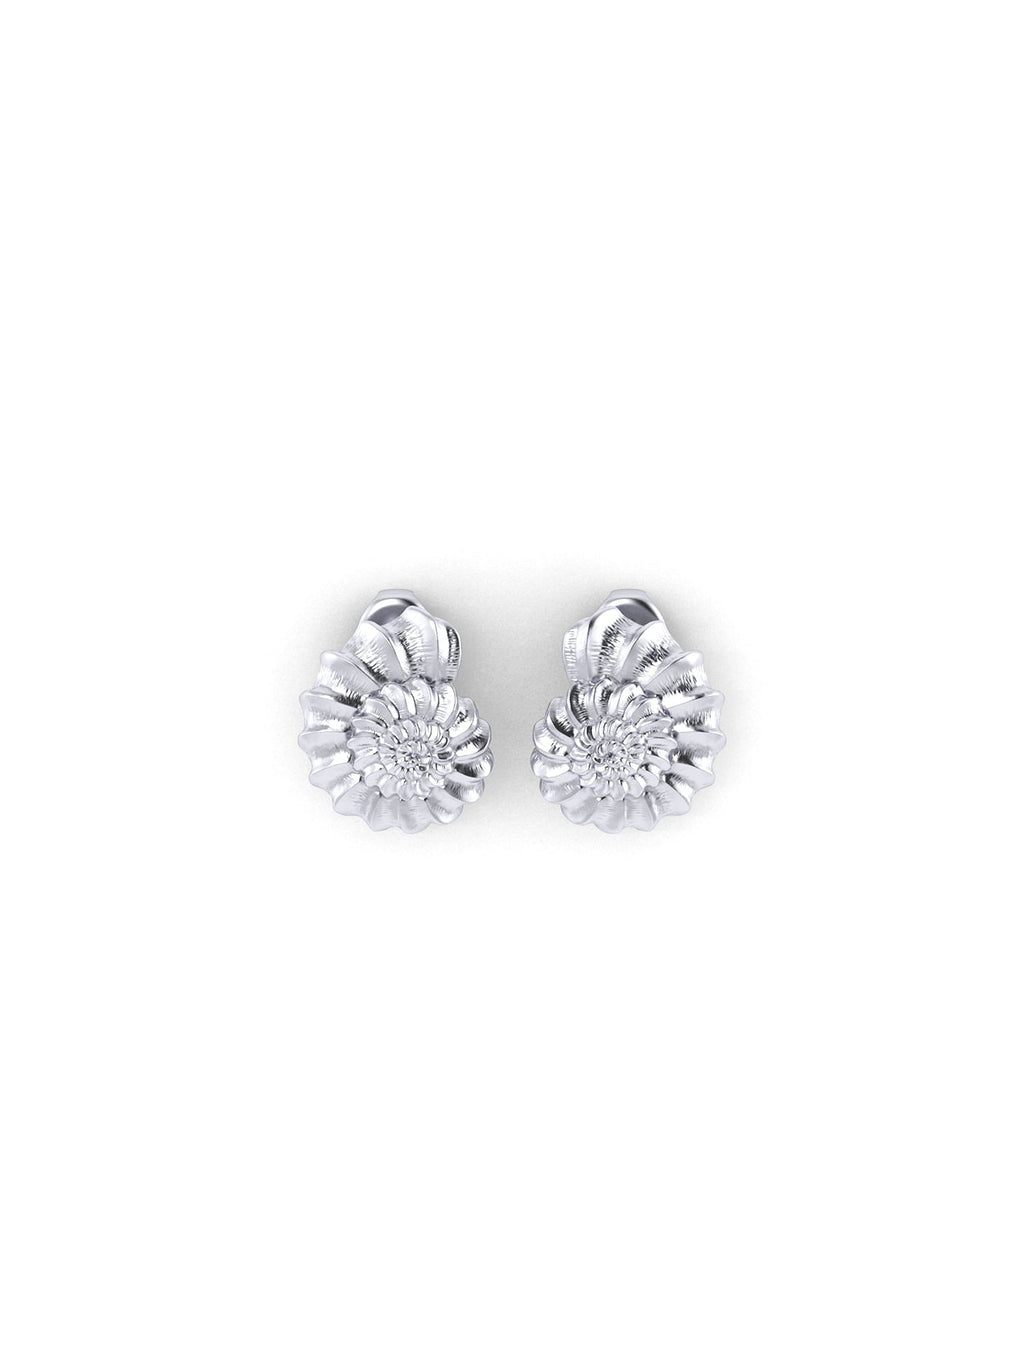 Eco silver earrings SHELL